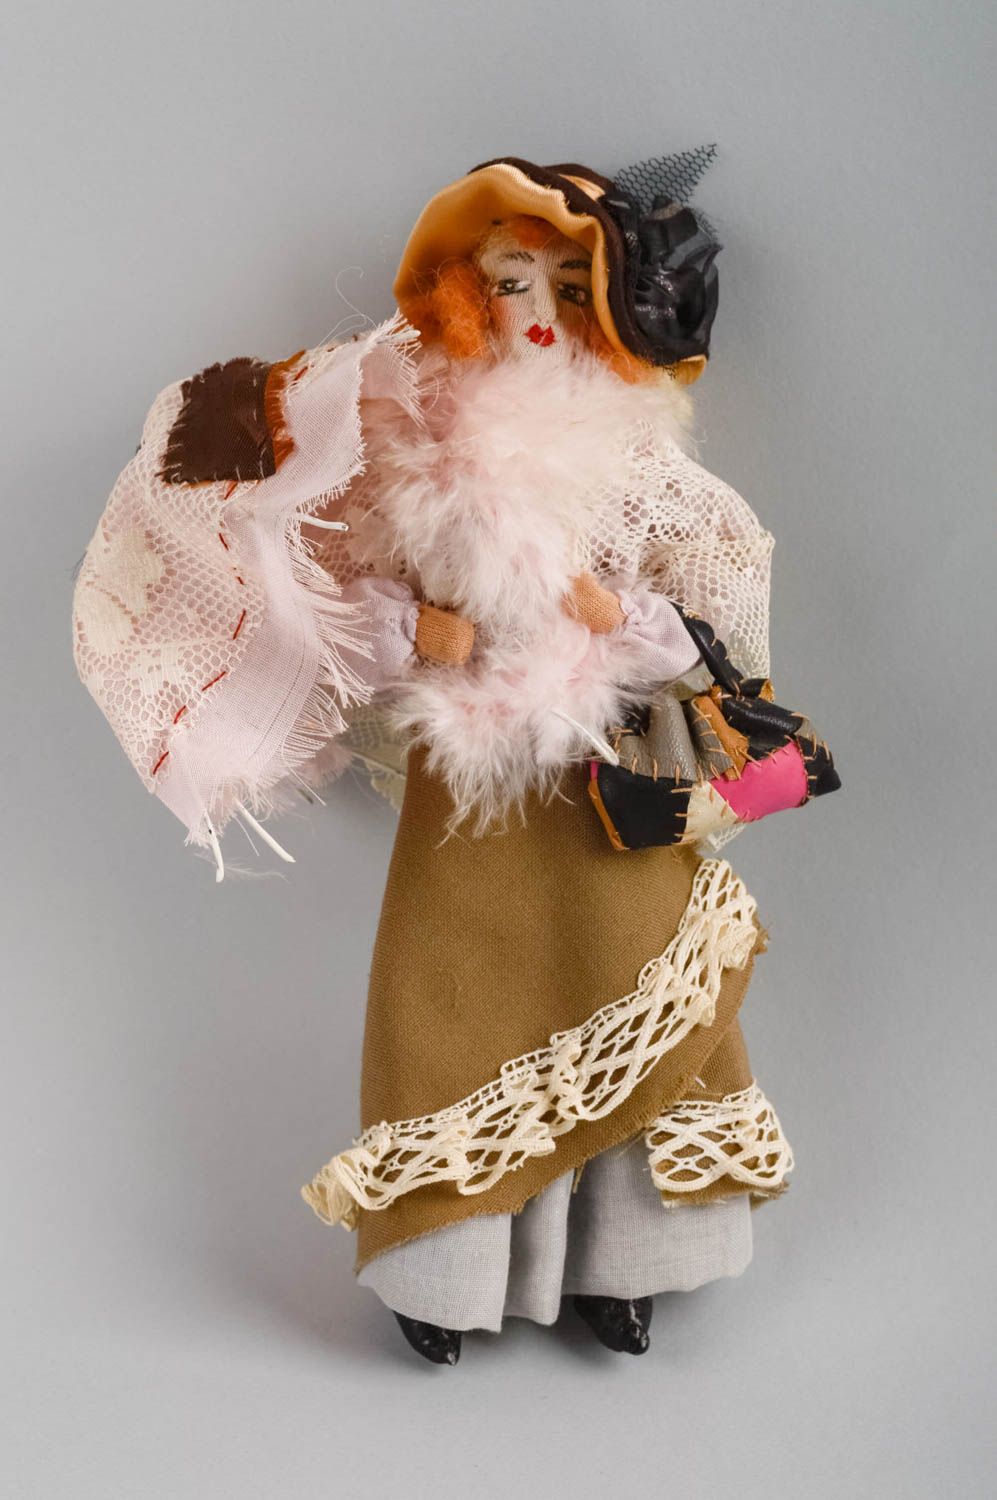 Handmade decorative rag doll for kids interior design and gift ideas  photo 1